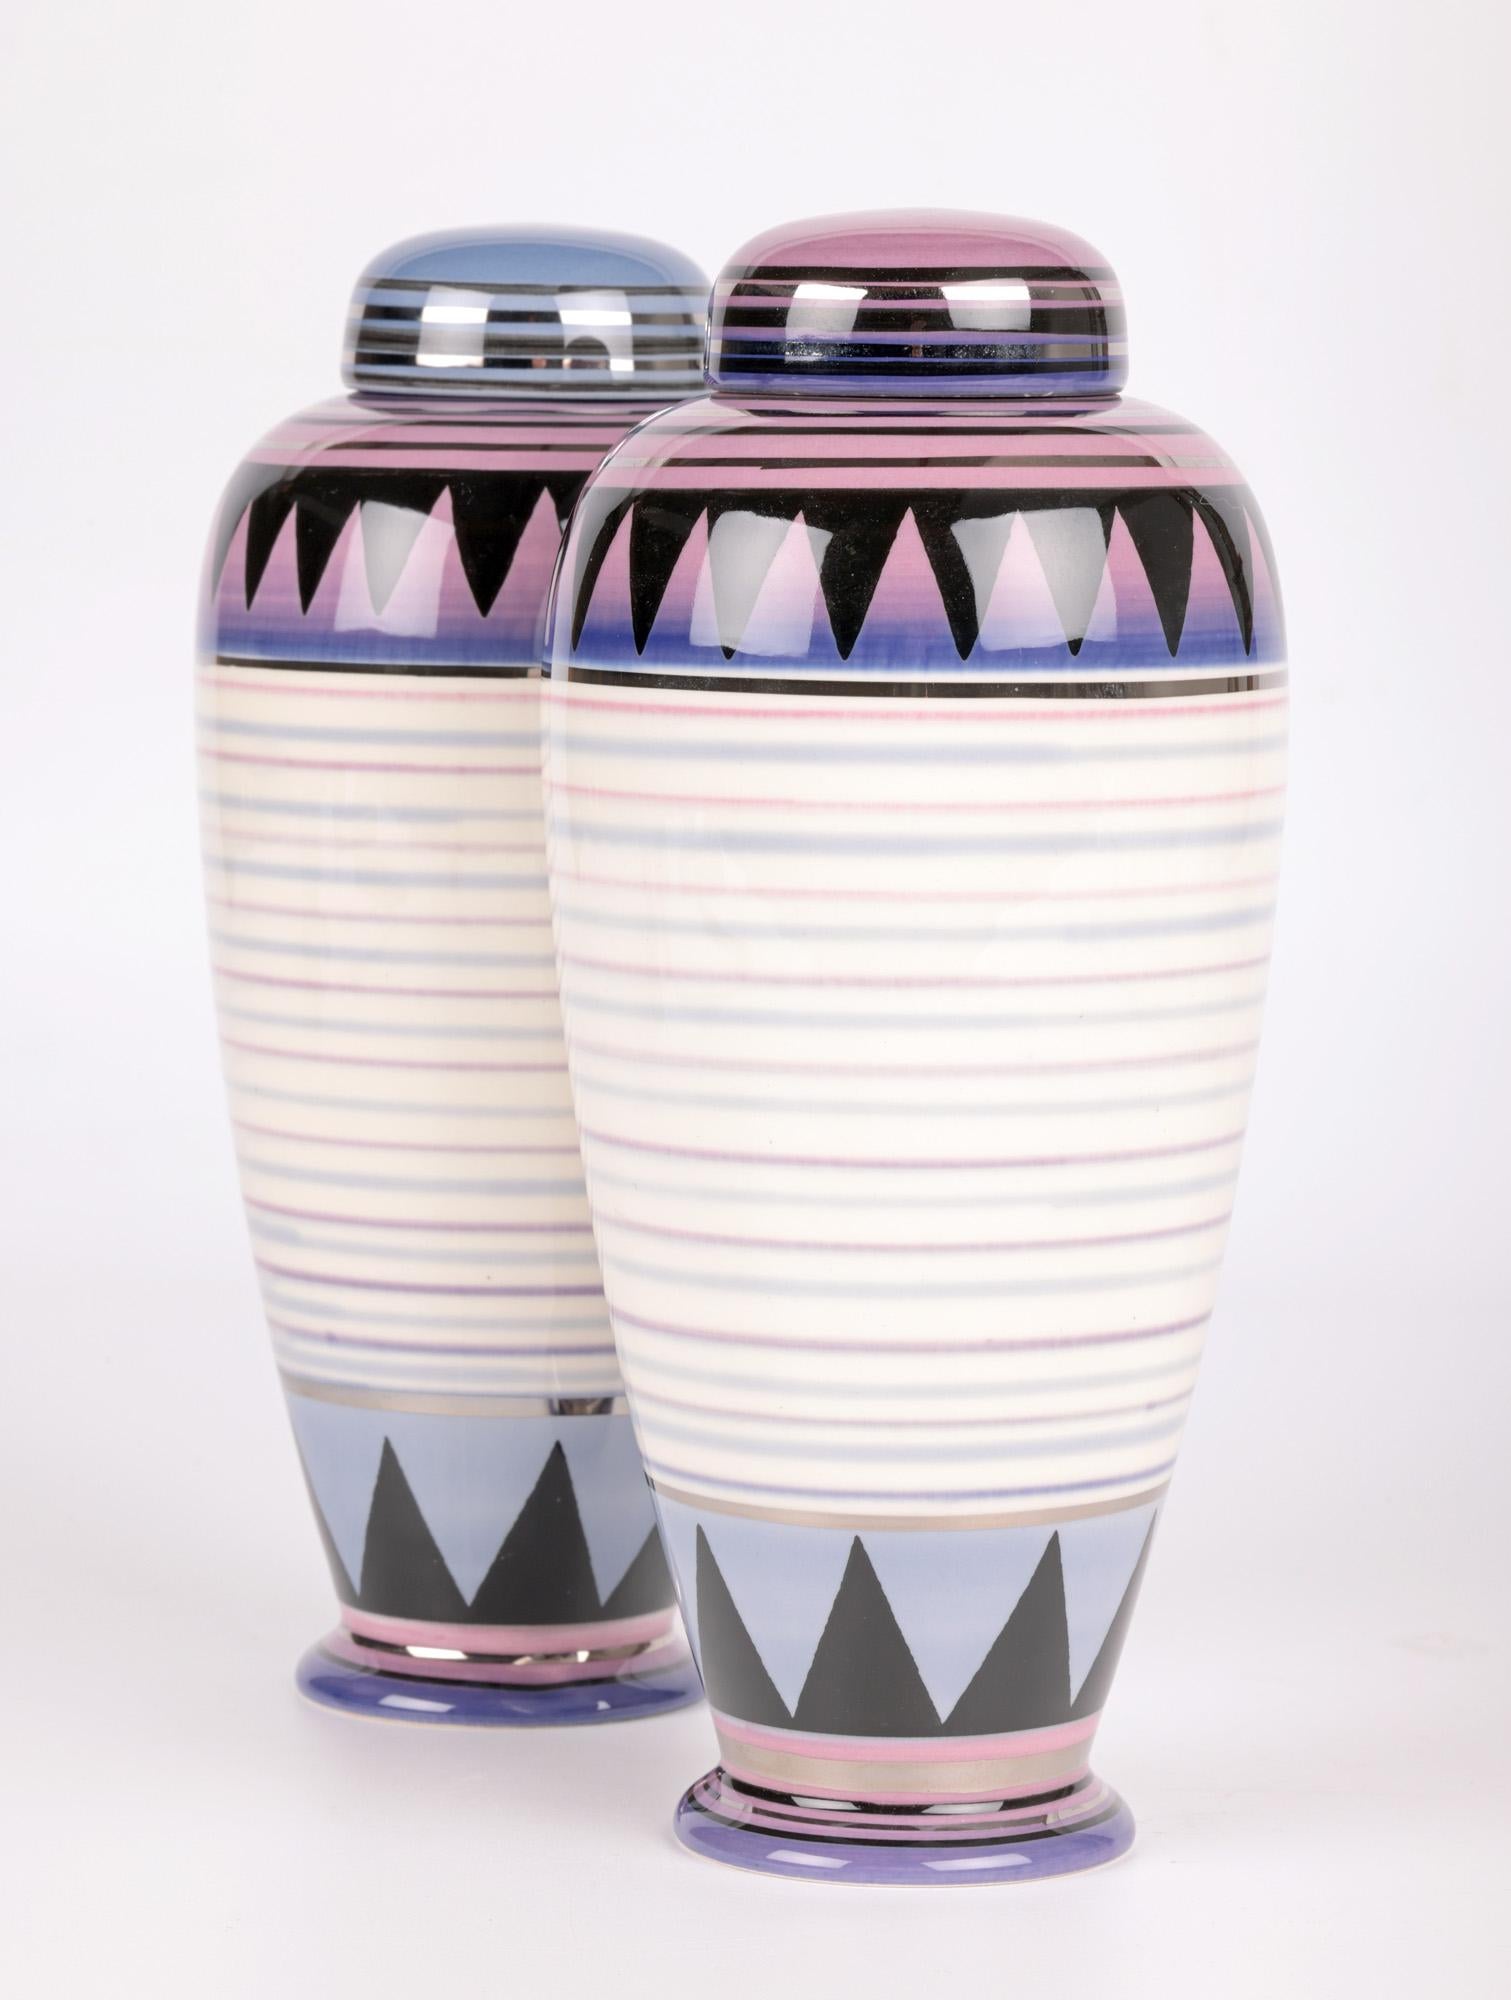 Moorland Pottery Paar keramische Vasen mit Deckeln   im Angebot 7